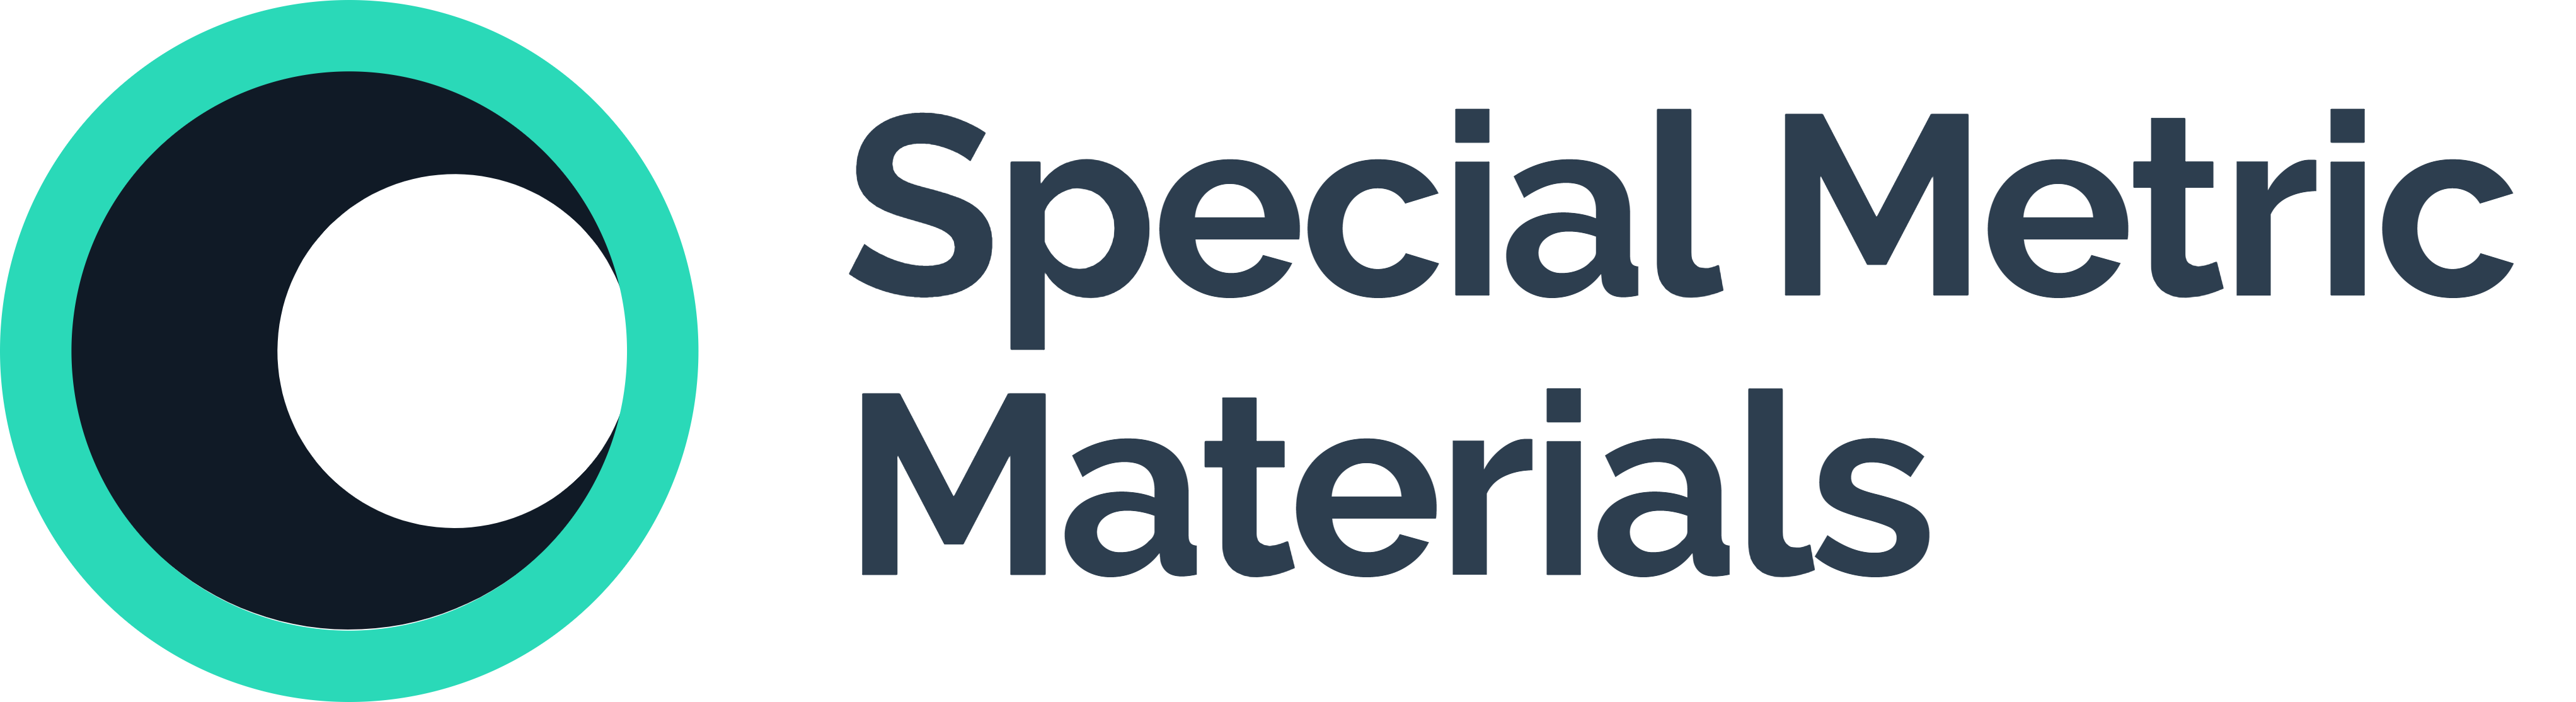 Special metric materials logo